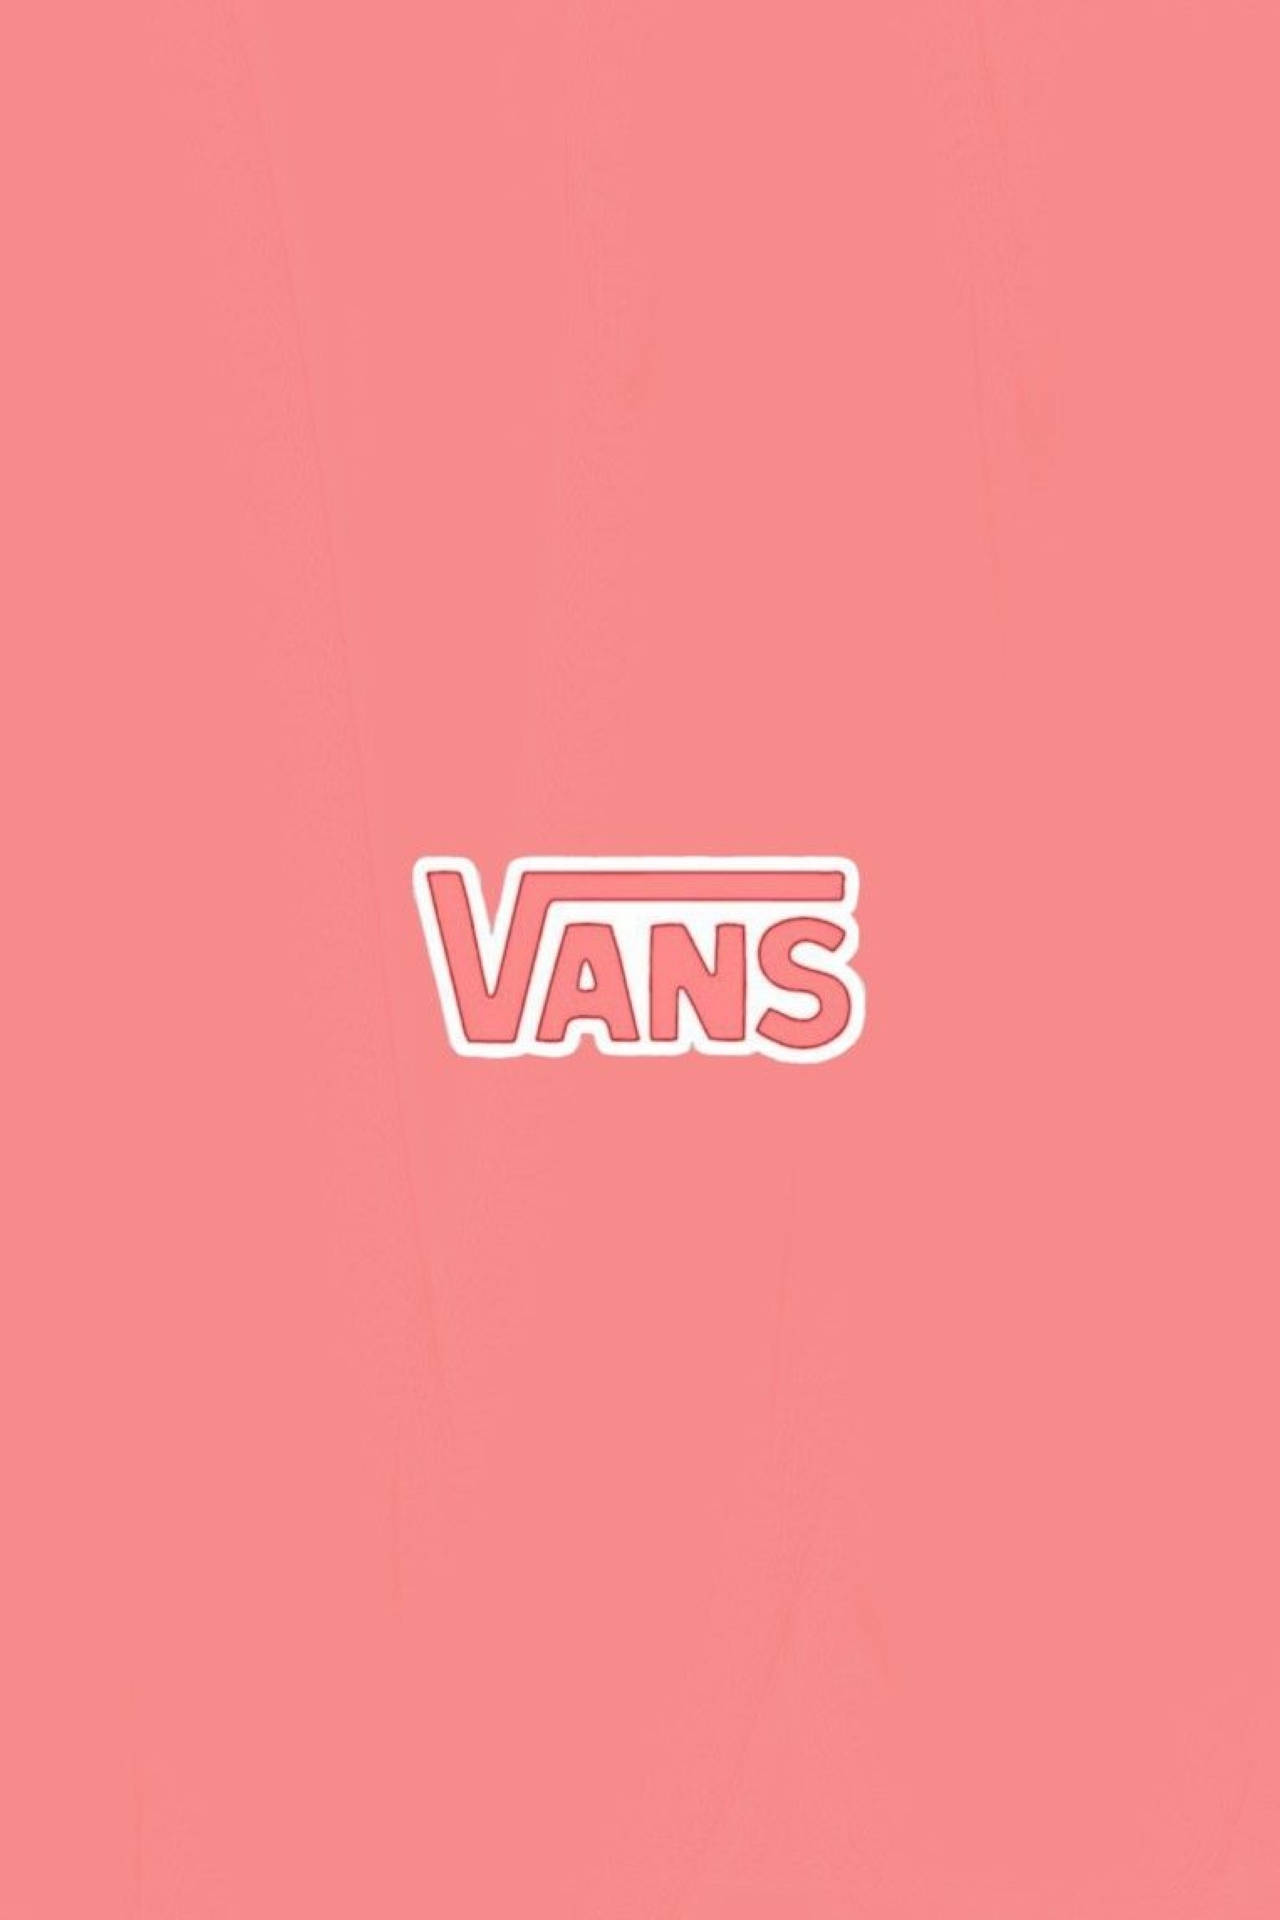 Top 999+ Vans Logo Wallpaper Full HD, 4K✅Free to Use